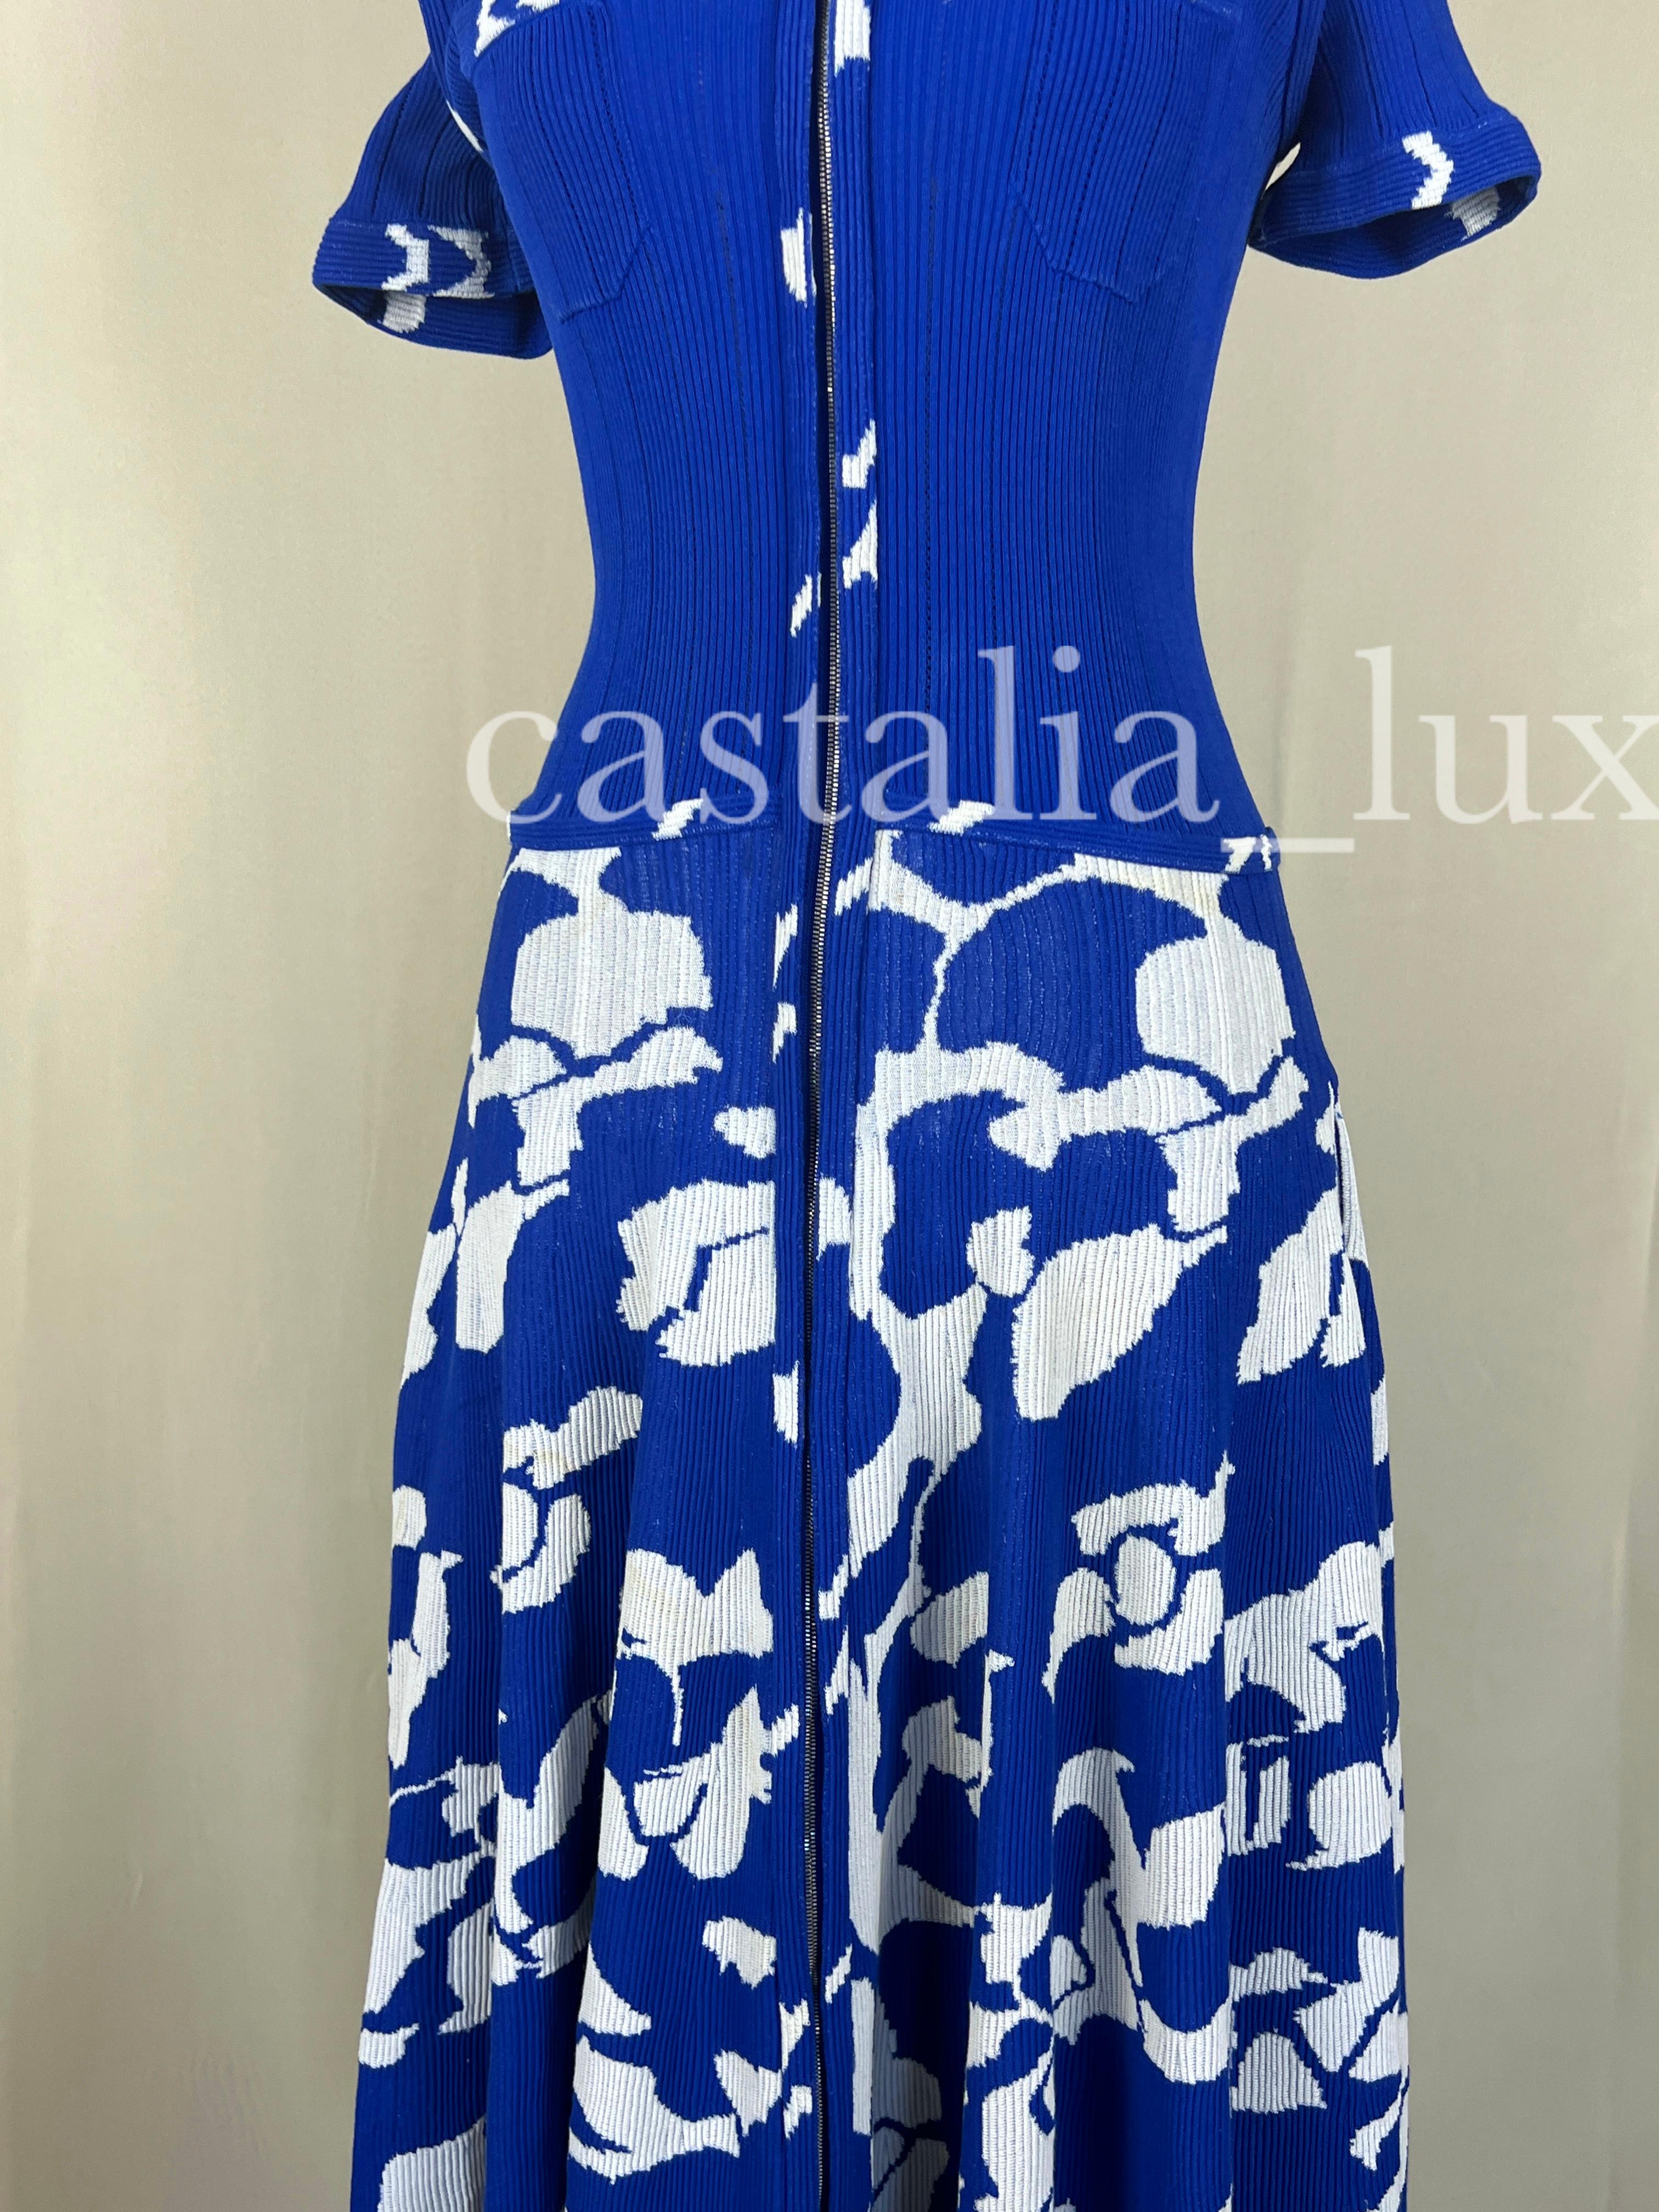 Chanel Iconic Jessica Biel Style Maxi Dress For Sale 5